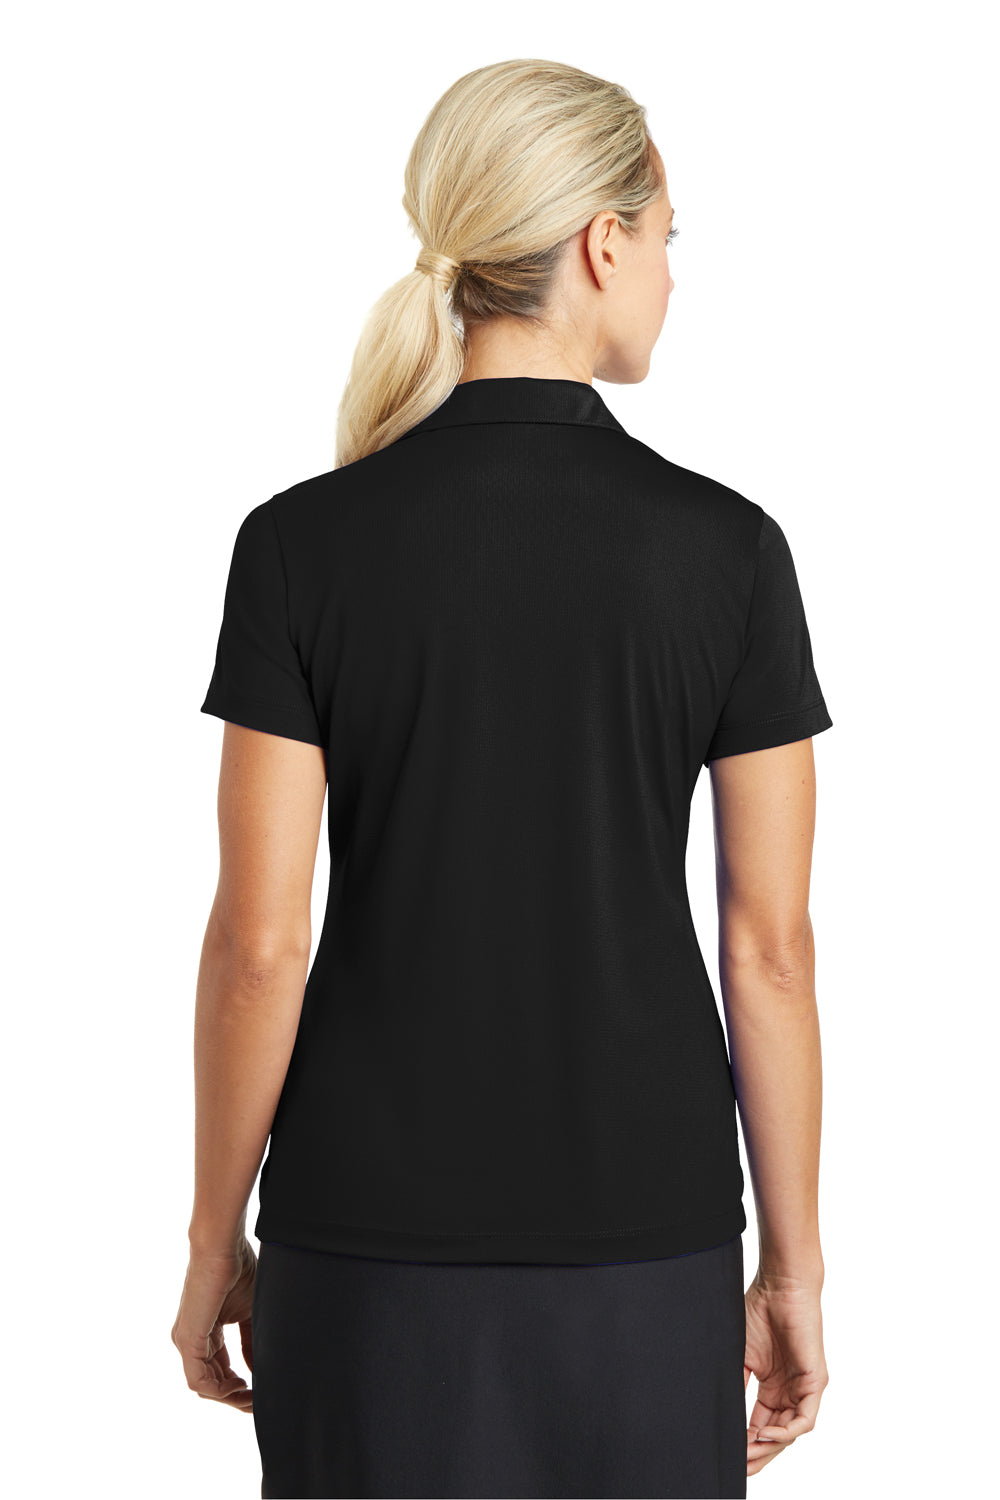 Nike 637165 Womens Dri-Fit Moisture Wicking Short Sleeve Polo Shirt Black Model Back